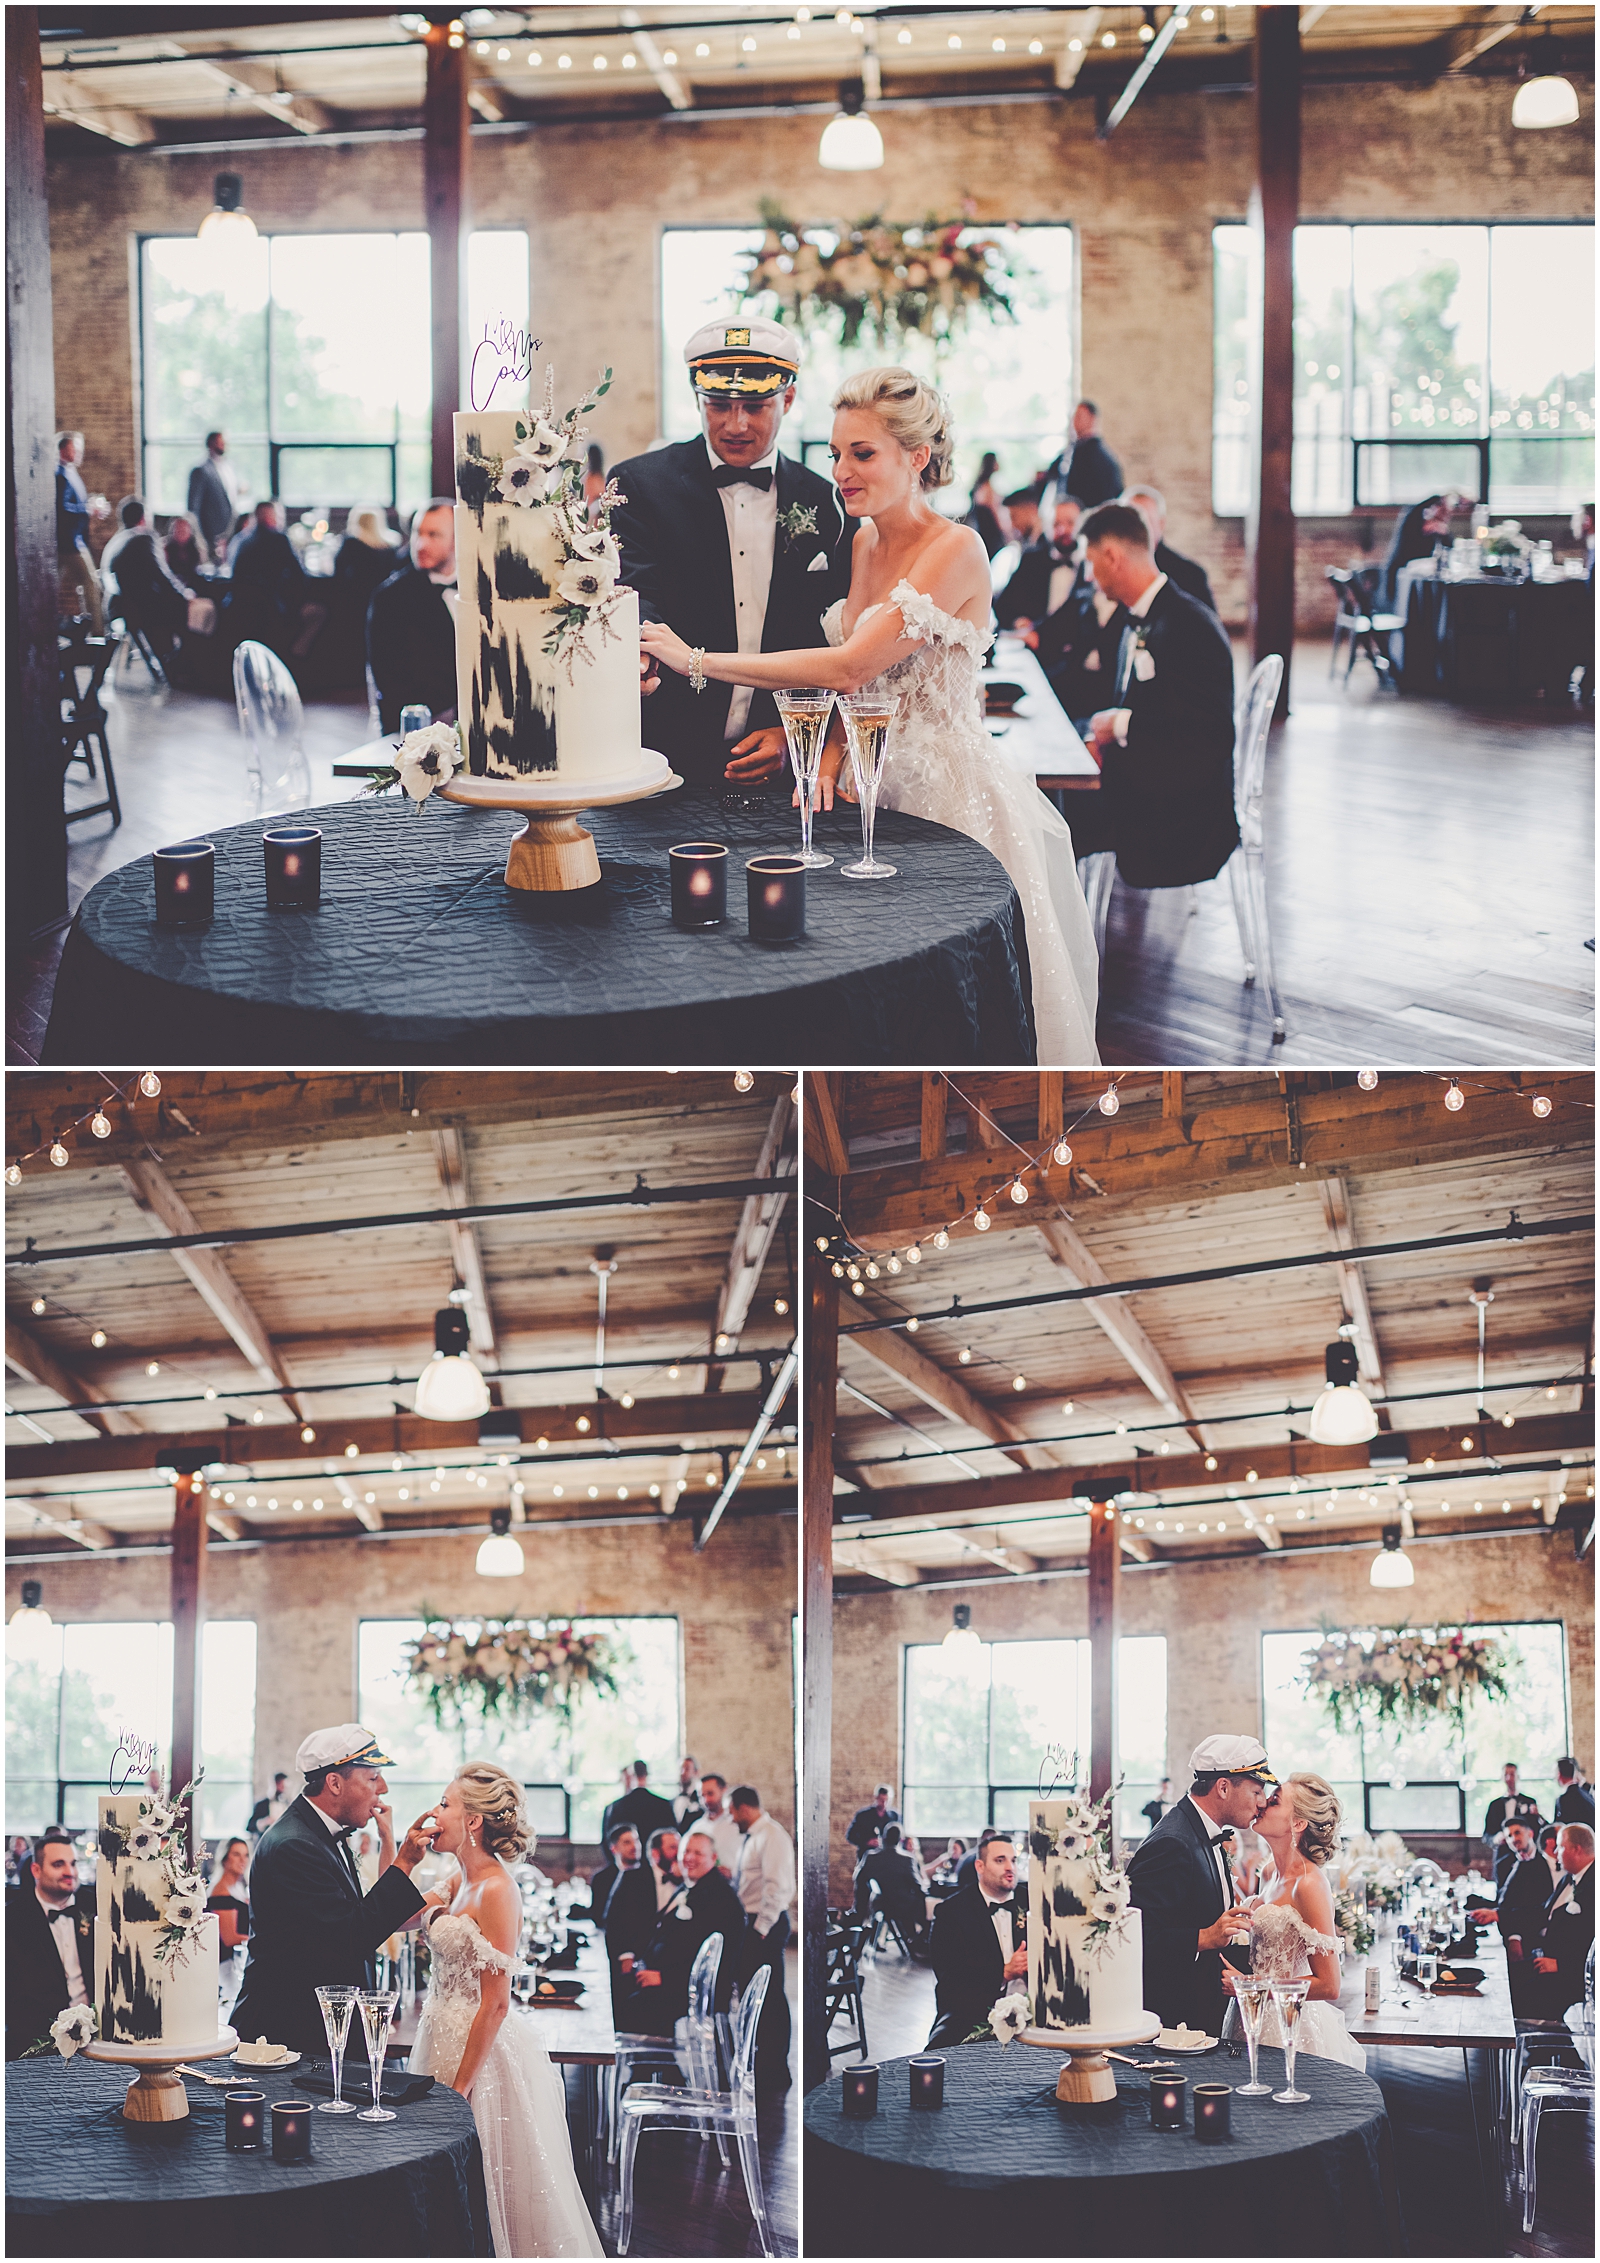 Jori and Matt's modern romantic wedding at the Biltwell in Indianapolis with Chicagoland wedding photographer Kara Evans Photographer.